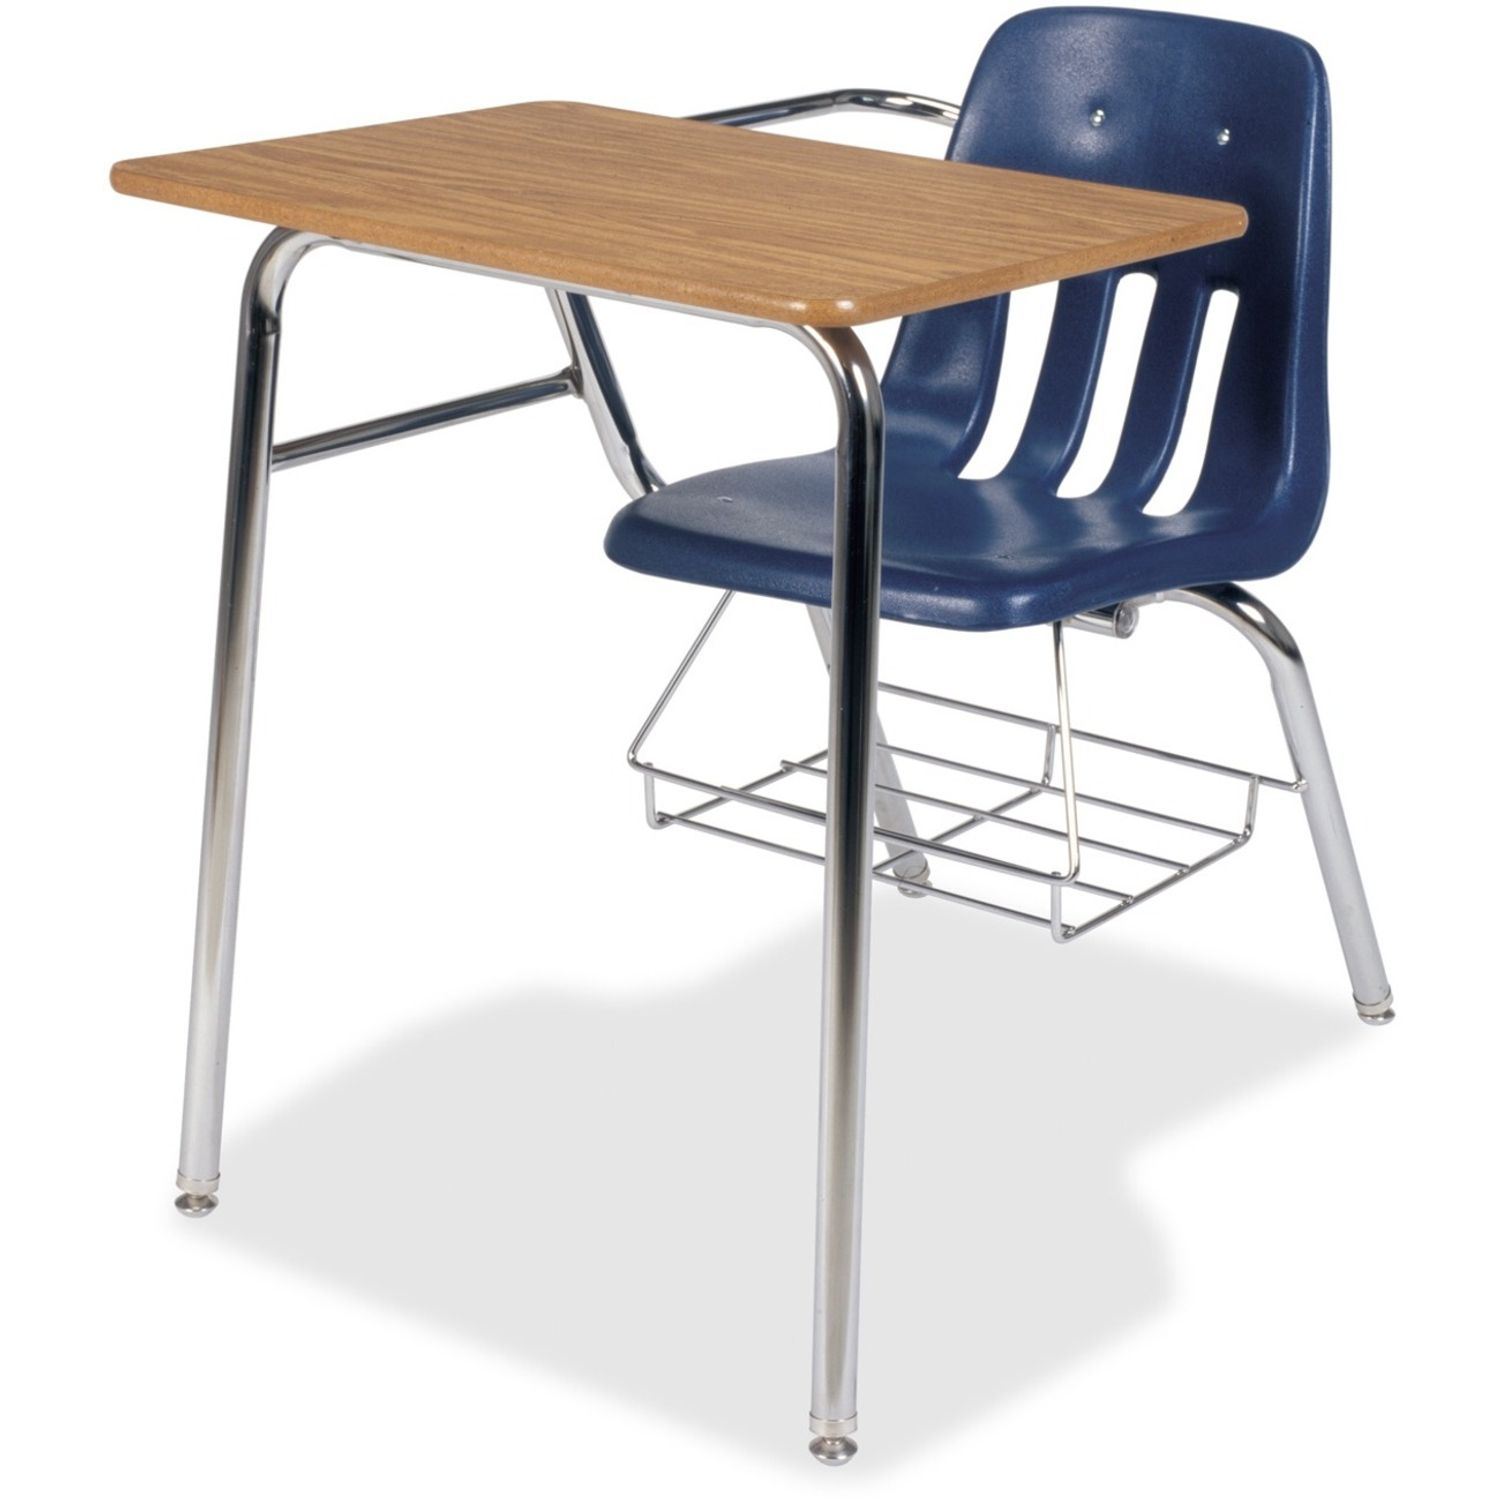 M-9400BR Chair Desk Laminated Rectangle Top, 24" Table Top Length x 18" Table Top Width, Chrome, Medium Oak, Navy